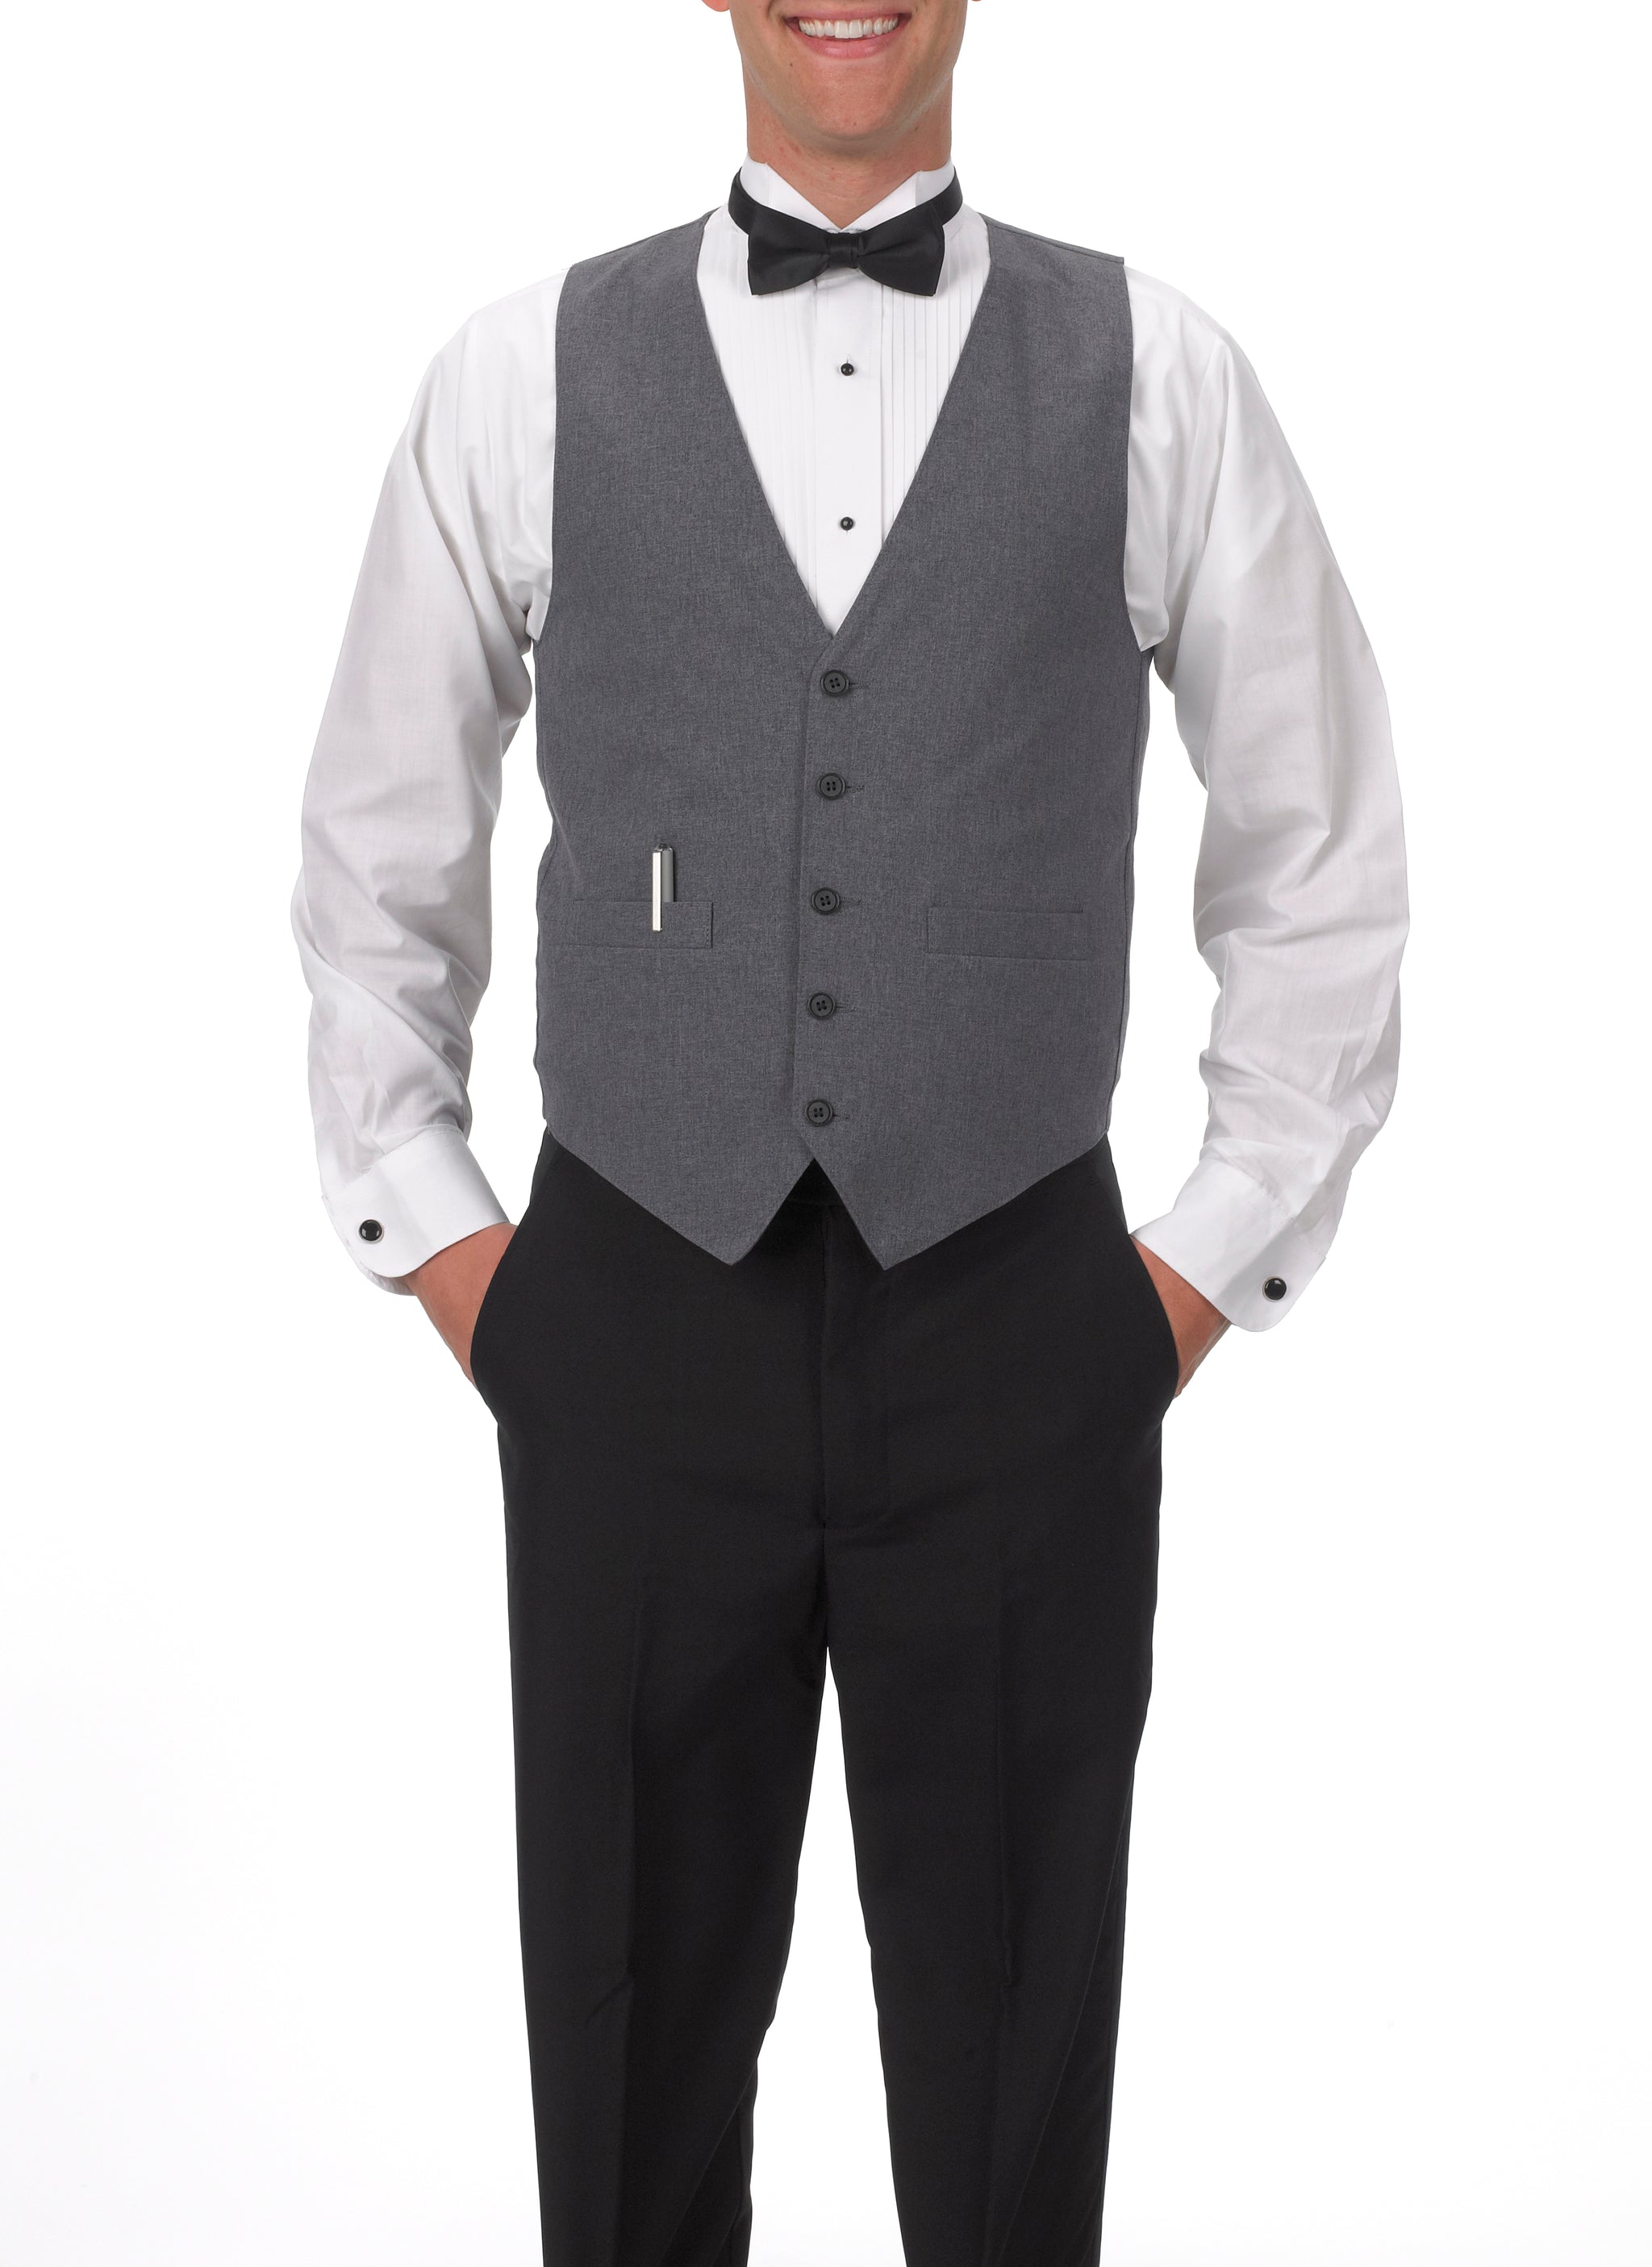 Men's Full Back Vest with Inside and Outside Pockets - 99tux